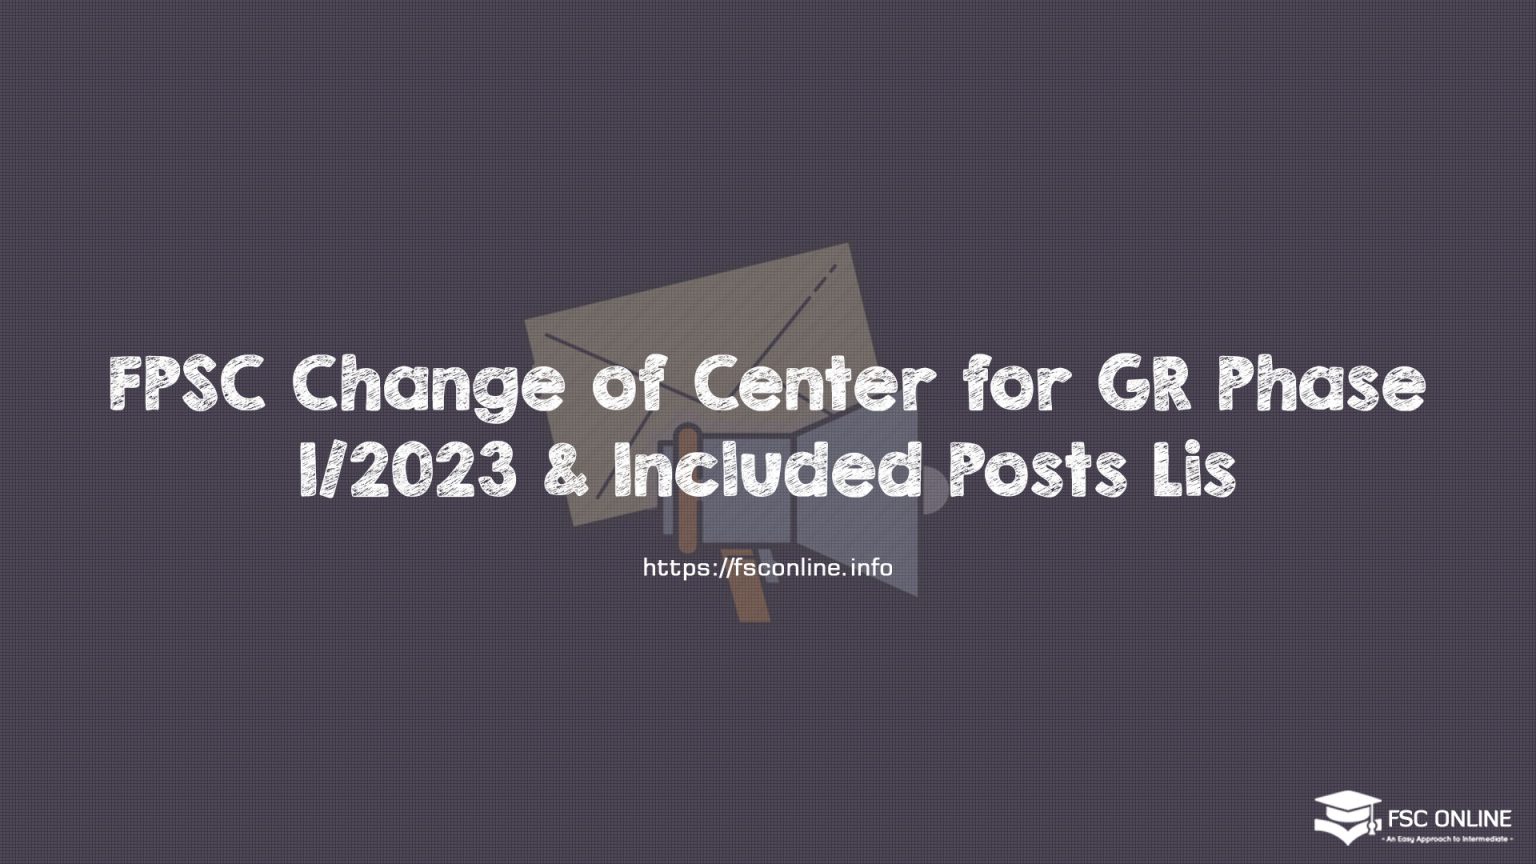 FPSC Change of Center for GR Phase I/2023 & Included Posts List